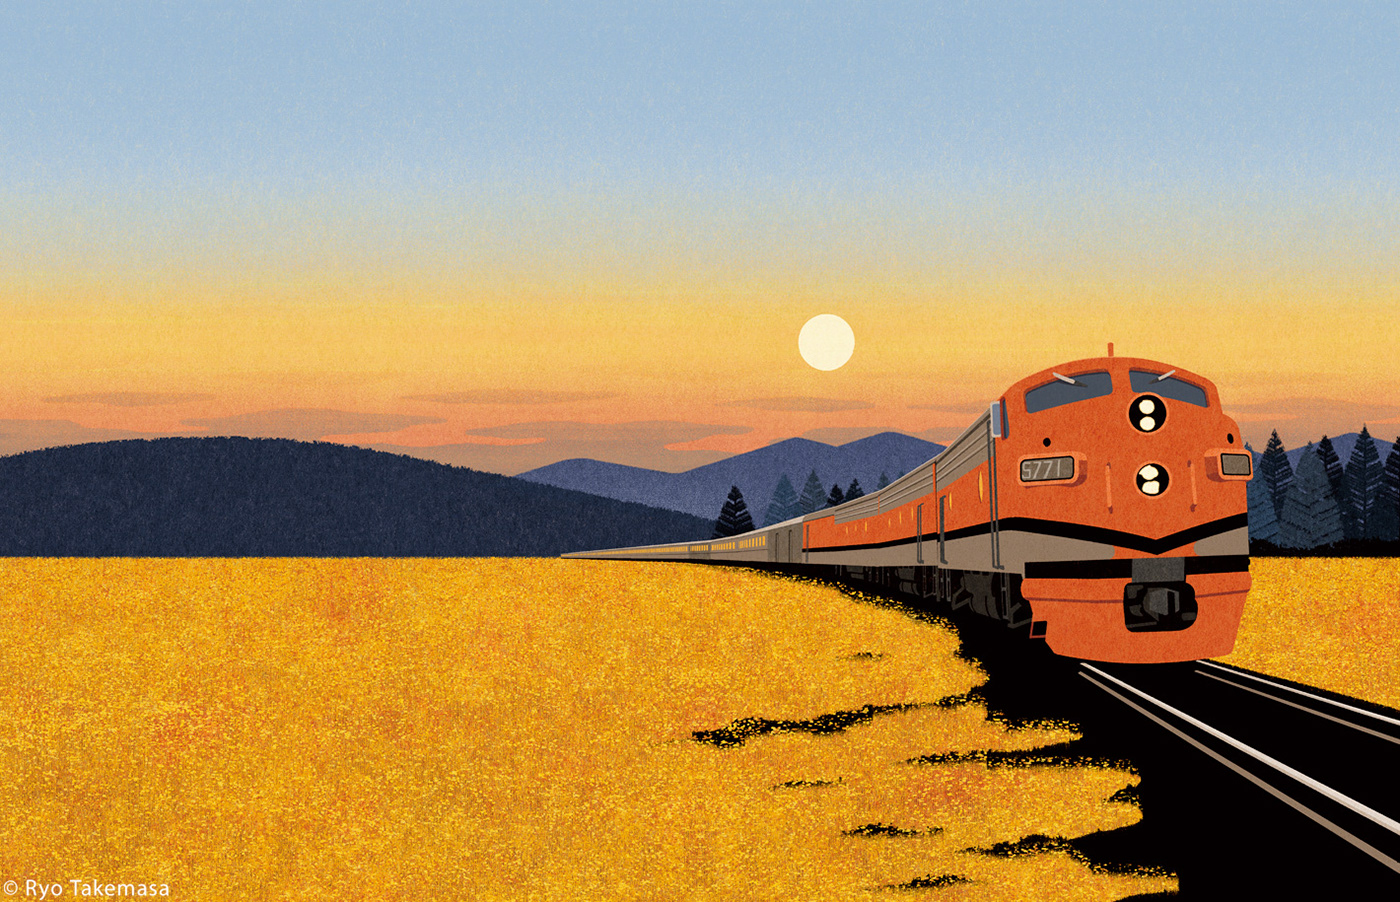 train Travel Landscape railway city railroad locomotive transportation Picture book Steam